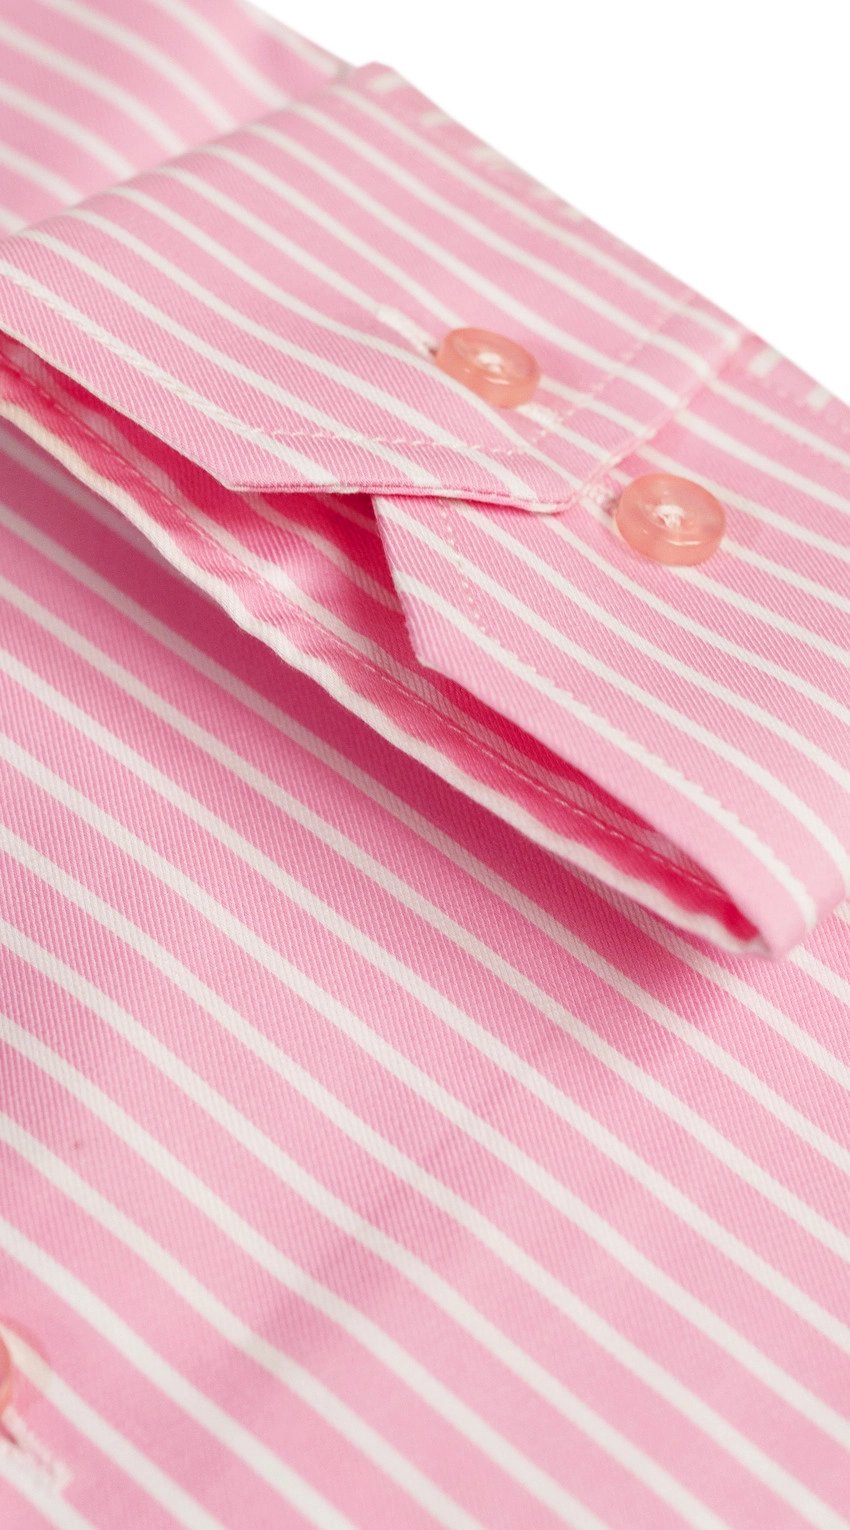 Pink and White Stripe Dress Shirt